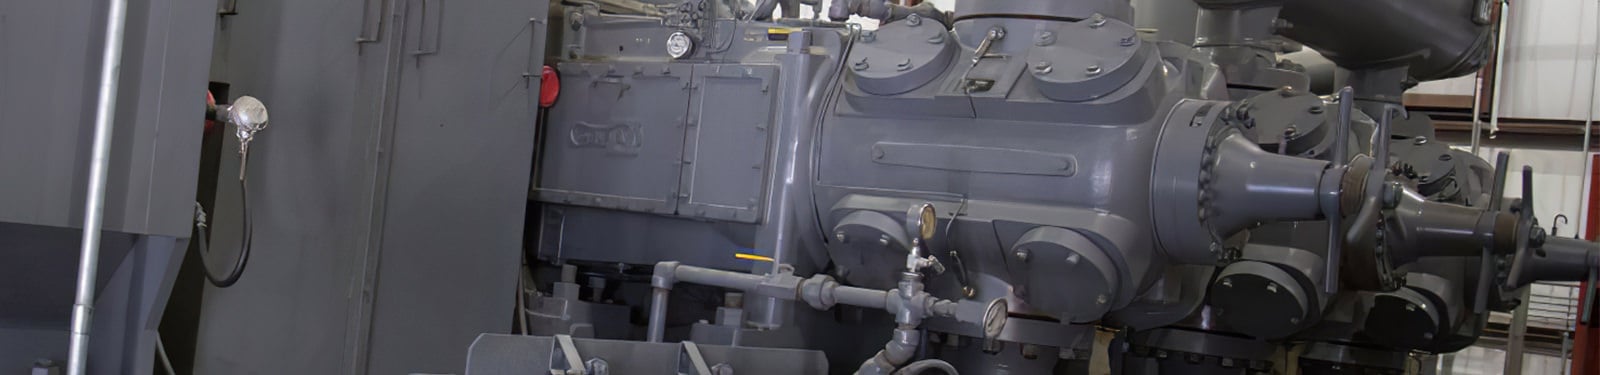 Industrial Gas Compressor Vibration Monitoring